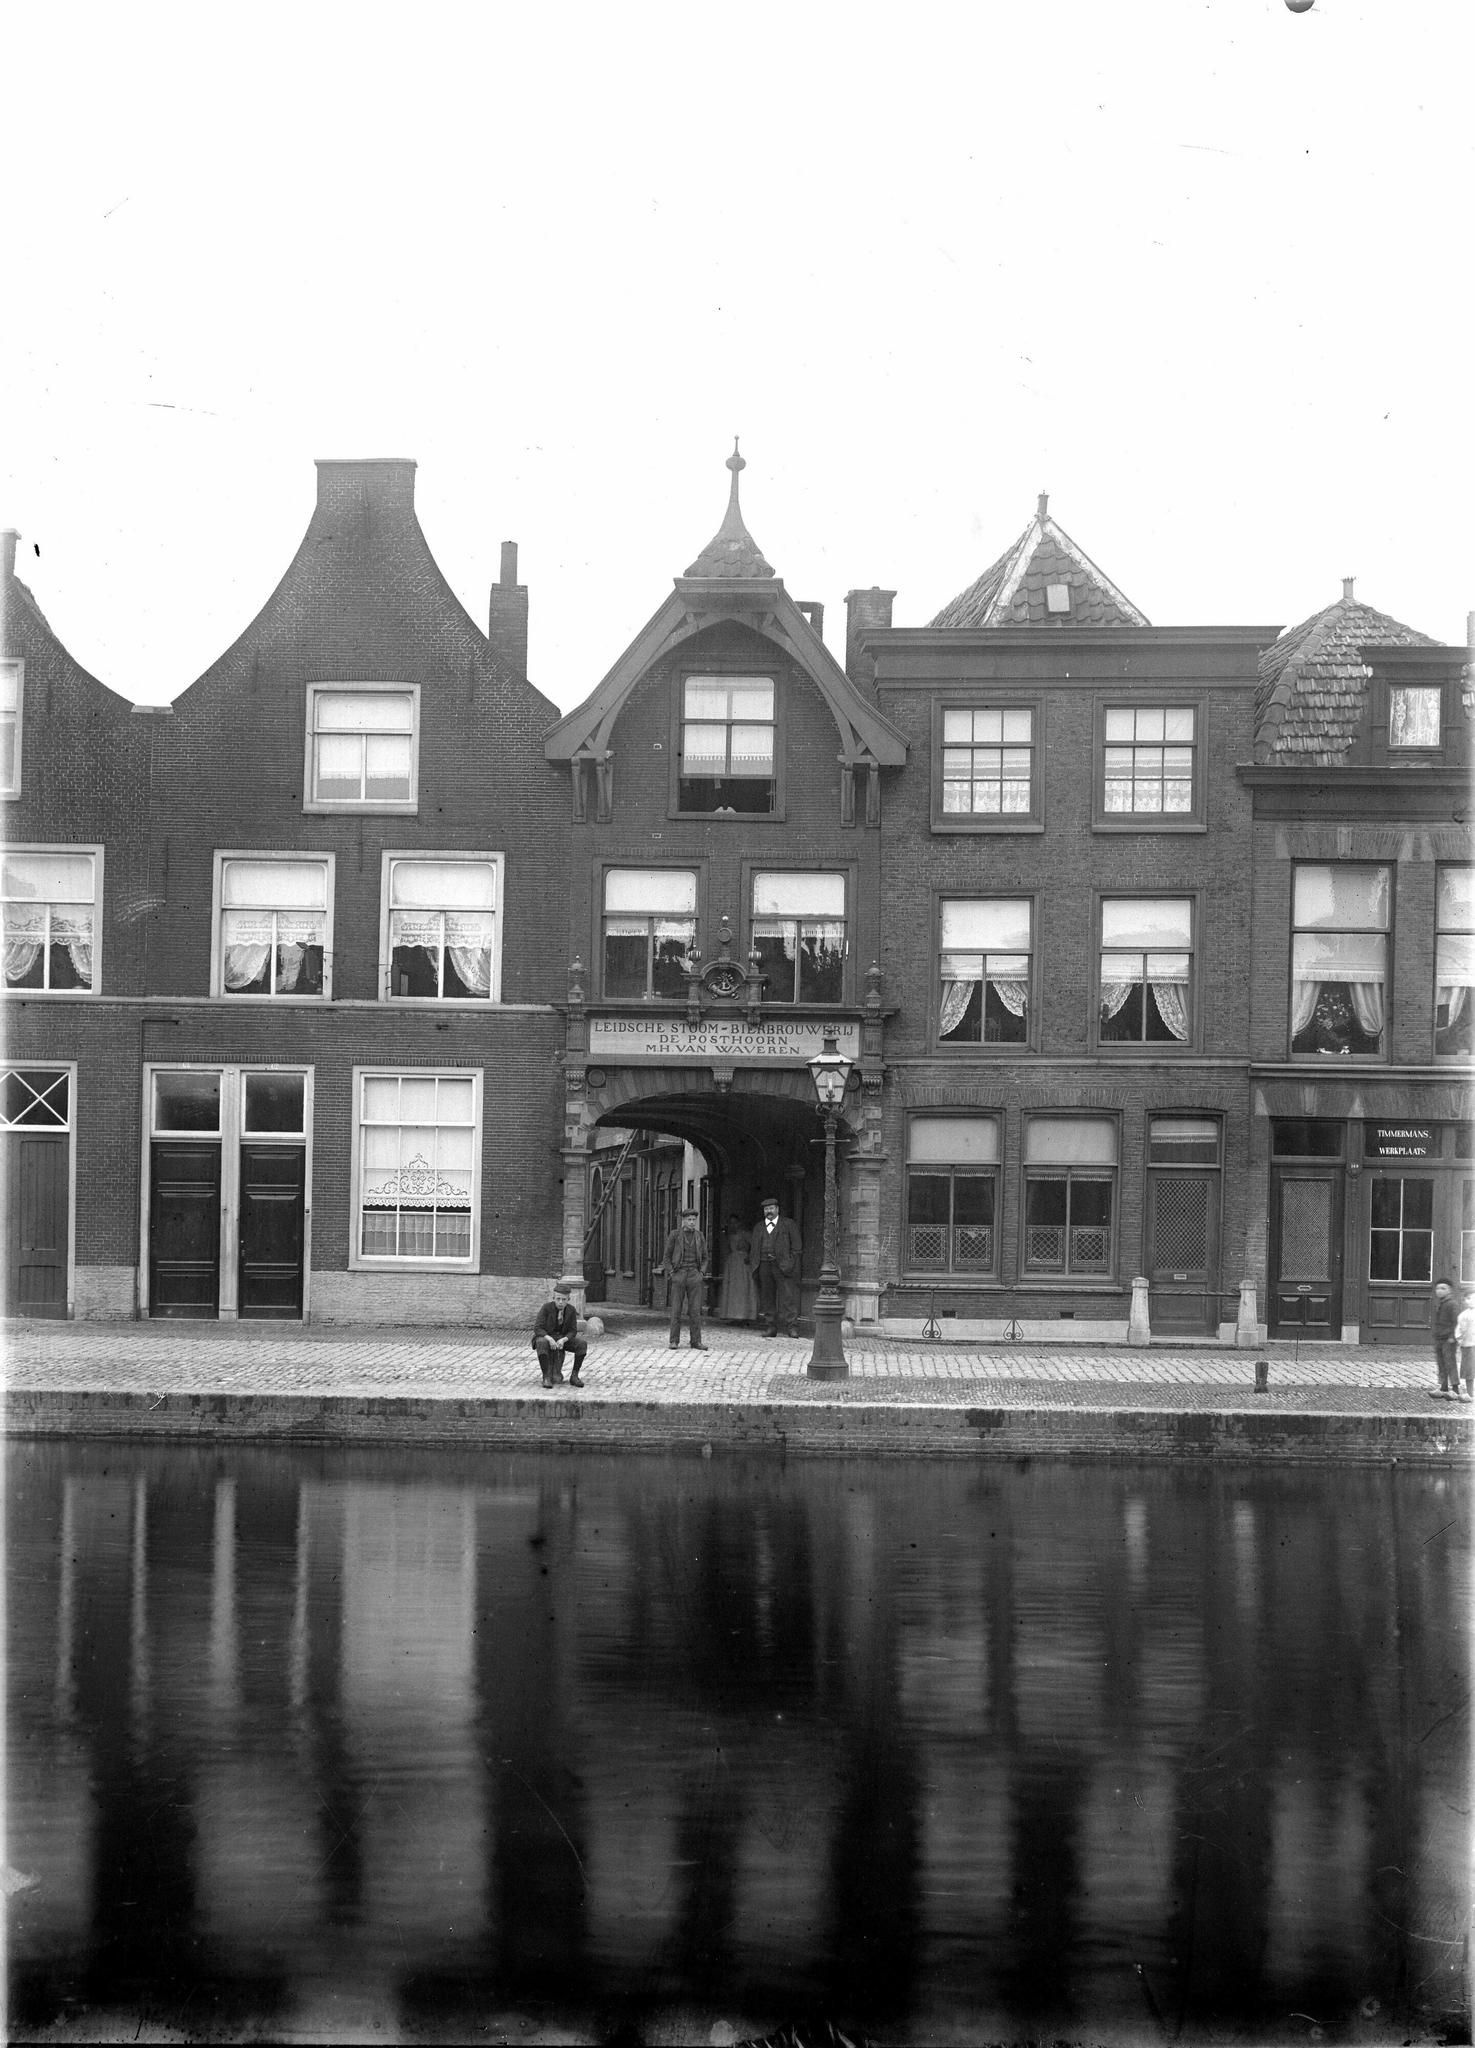 Oude Vest 171 - Leiden